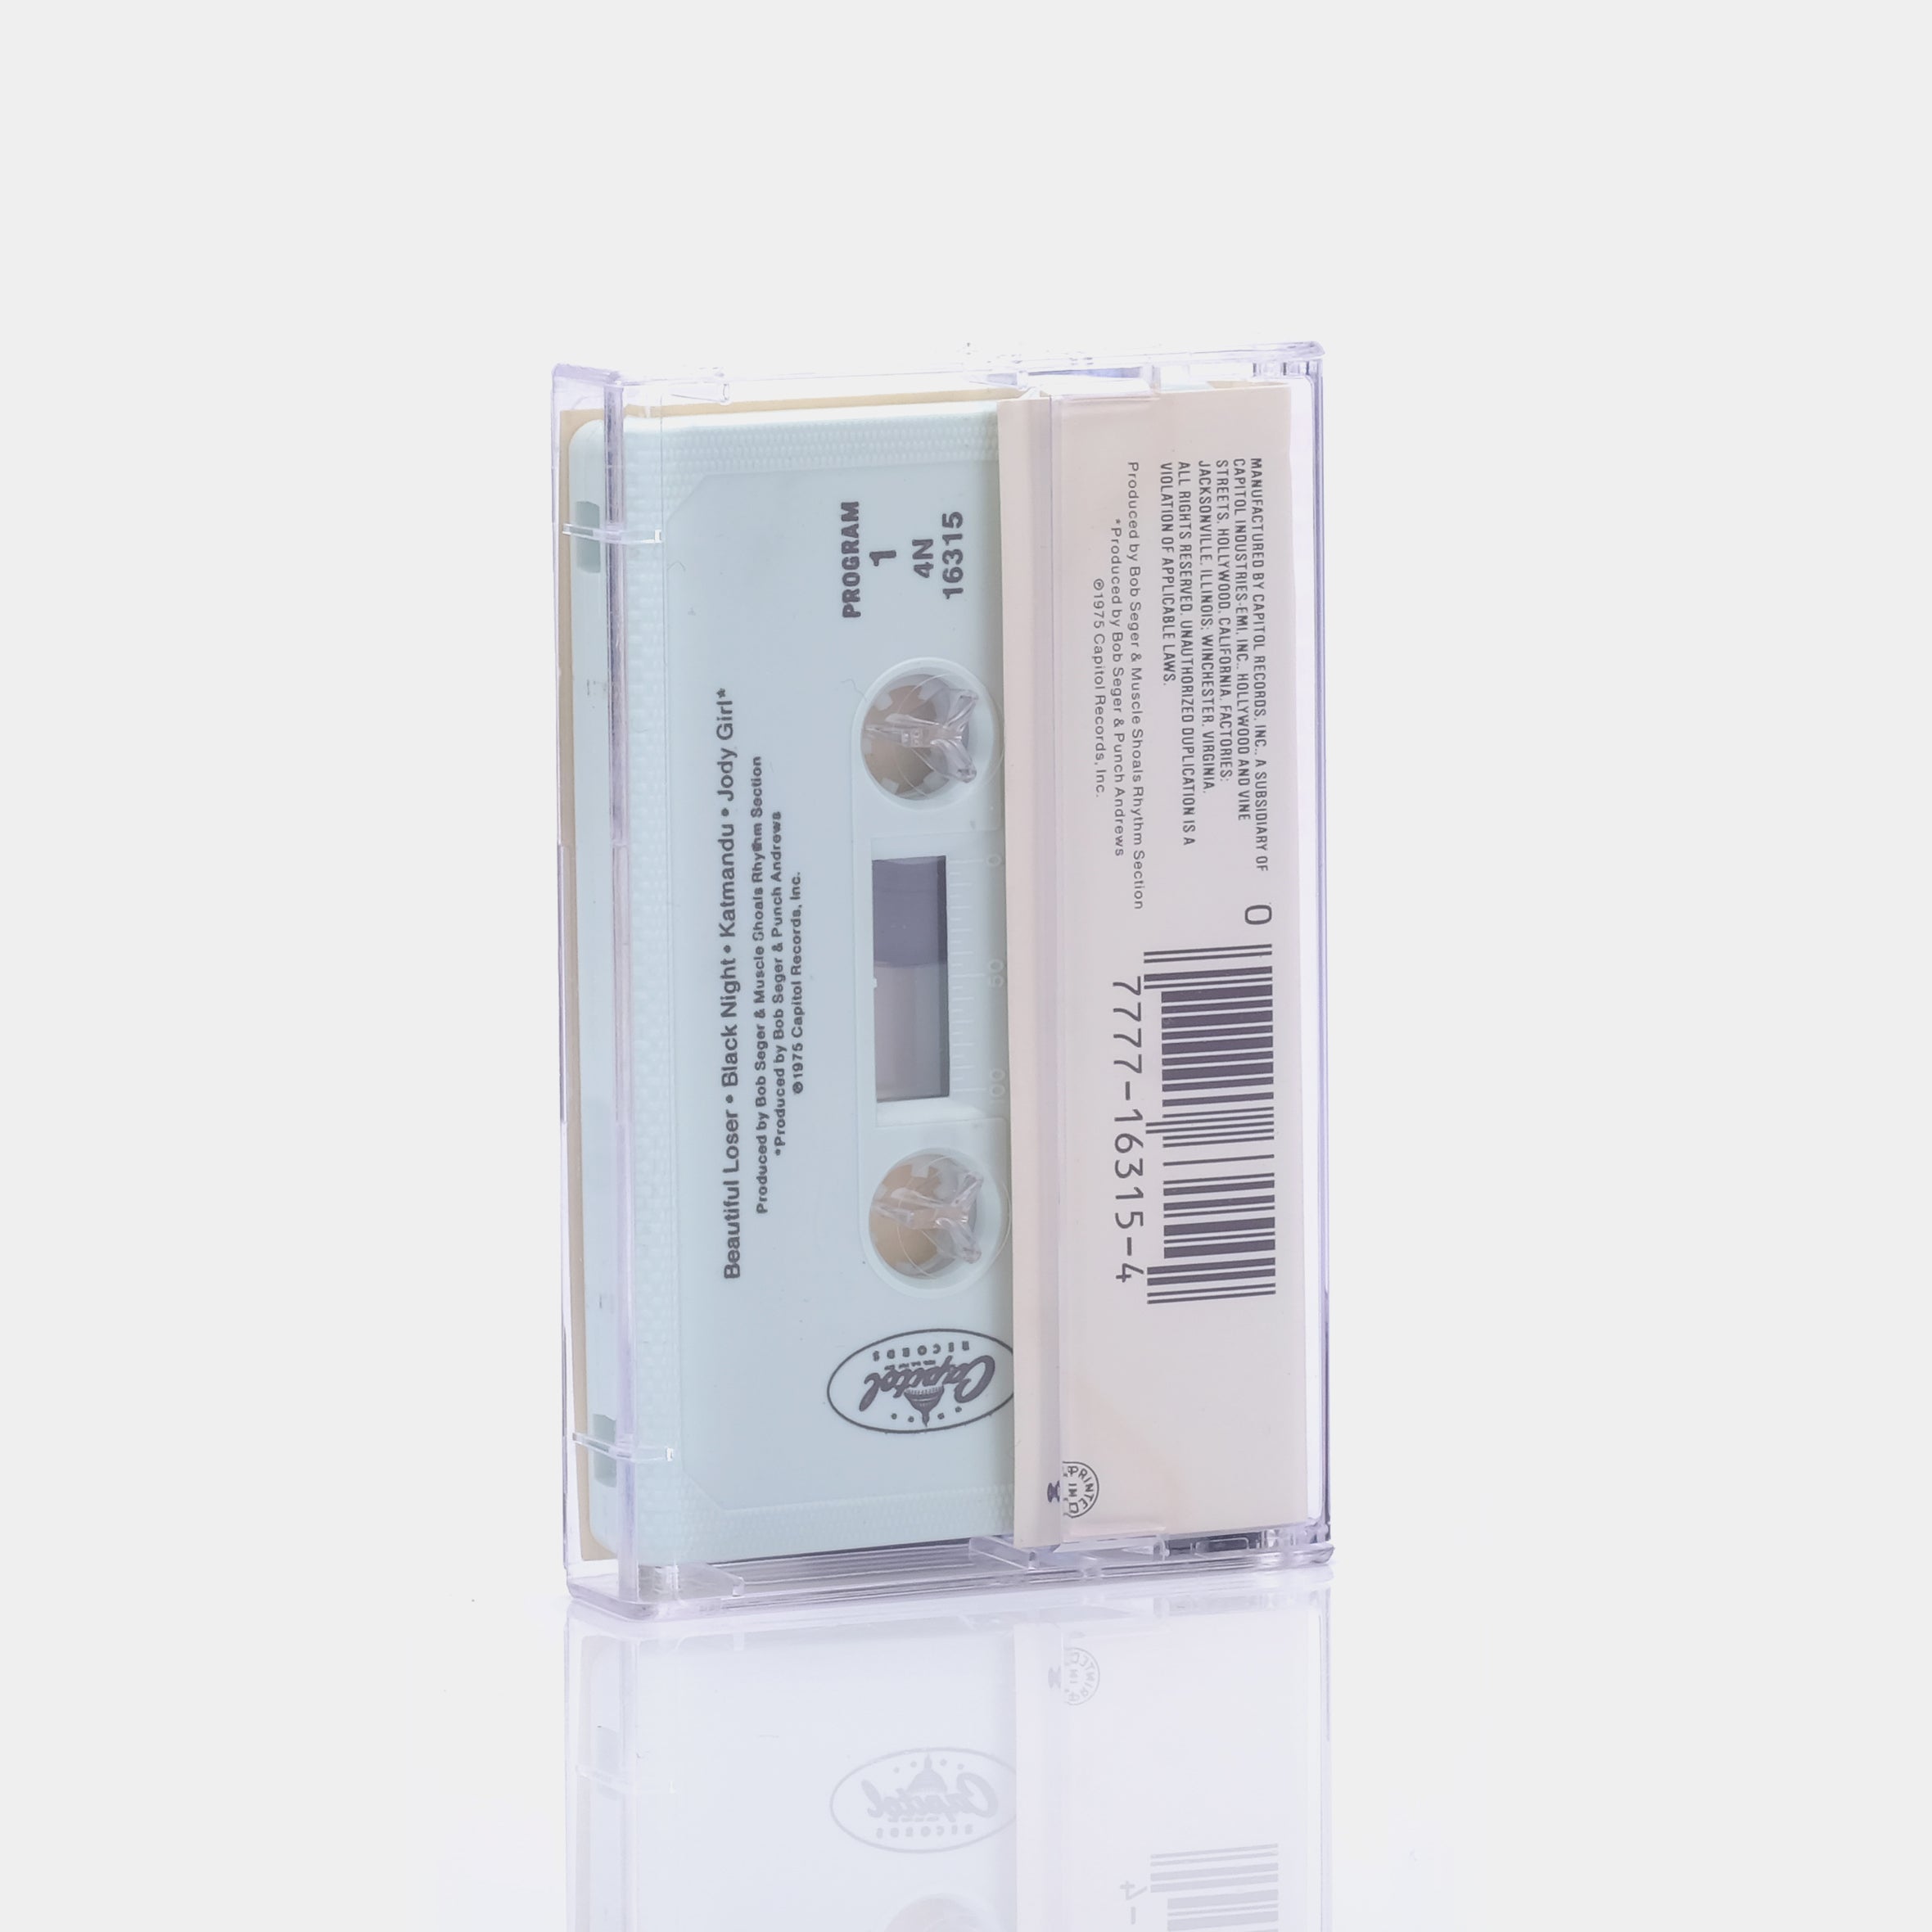 Bob Seger - Beautiful Loser Cassette Tape